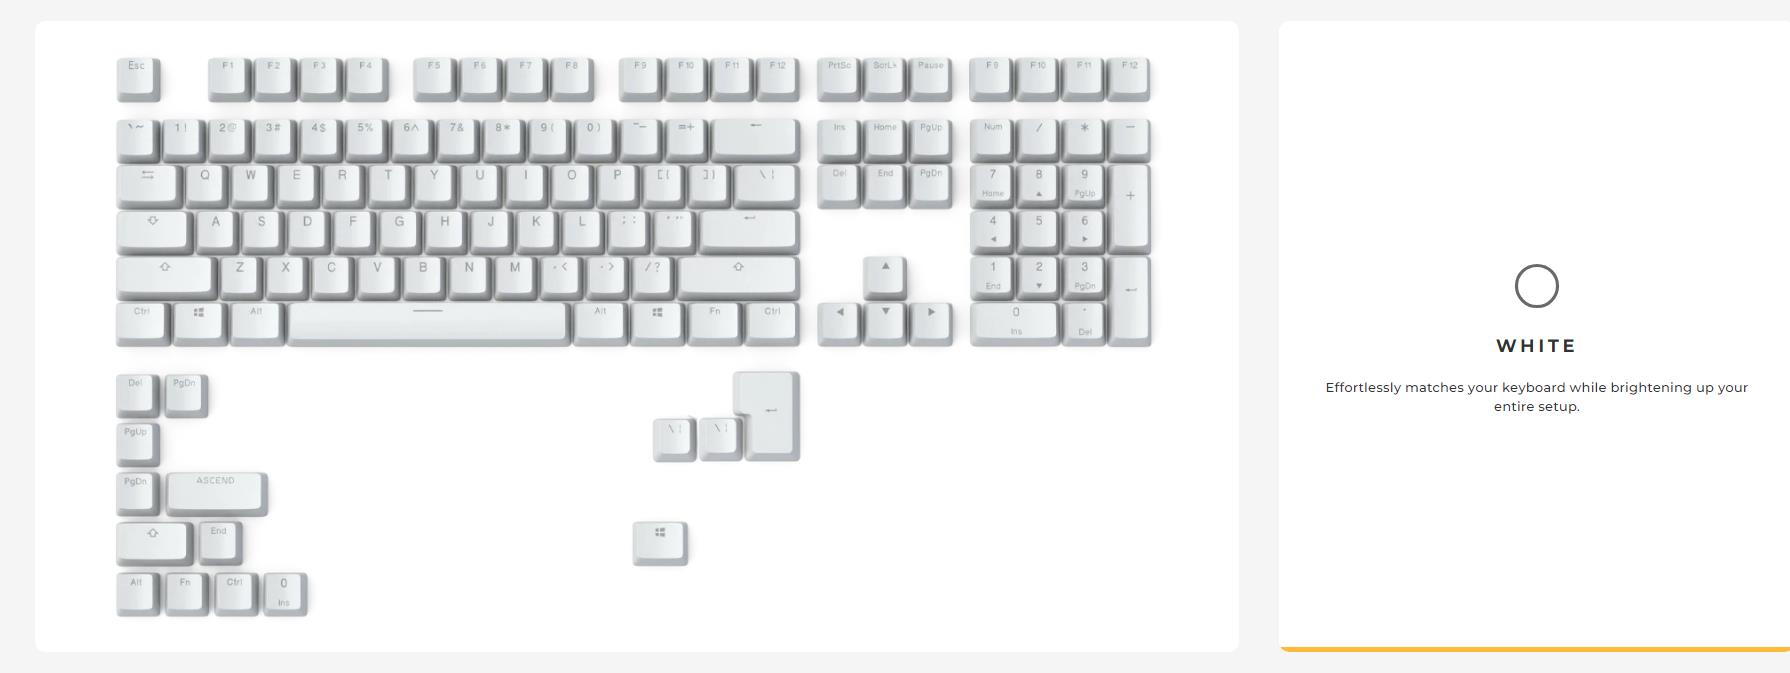 A large marketing image providing additional information about the product Glorious GMMK ABS Doubleshot V2 USA Base Kit Keycap Set 123pcs - White - Additional alt info not provided